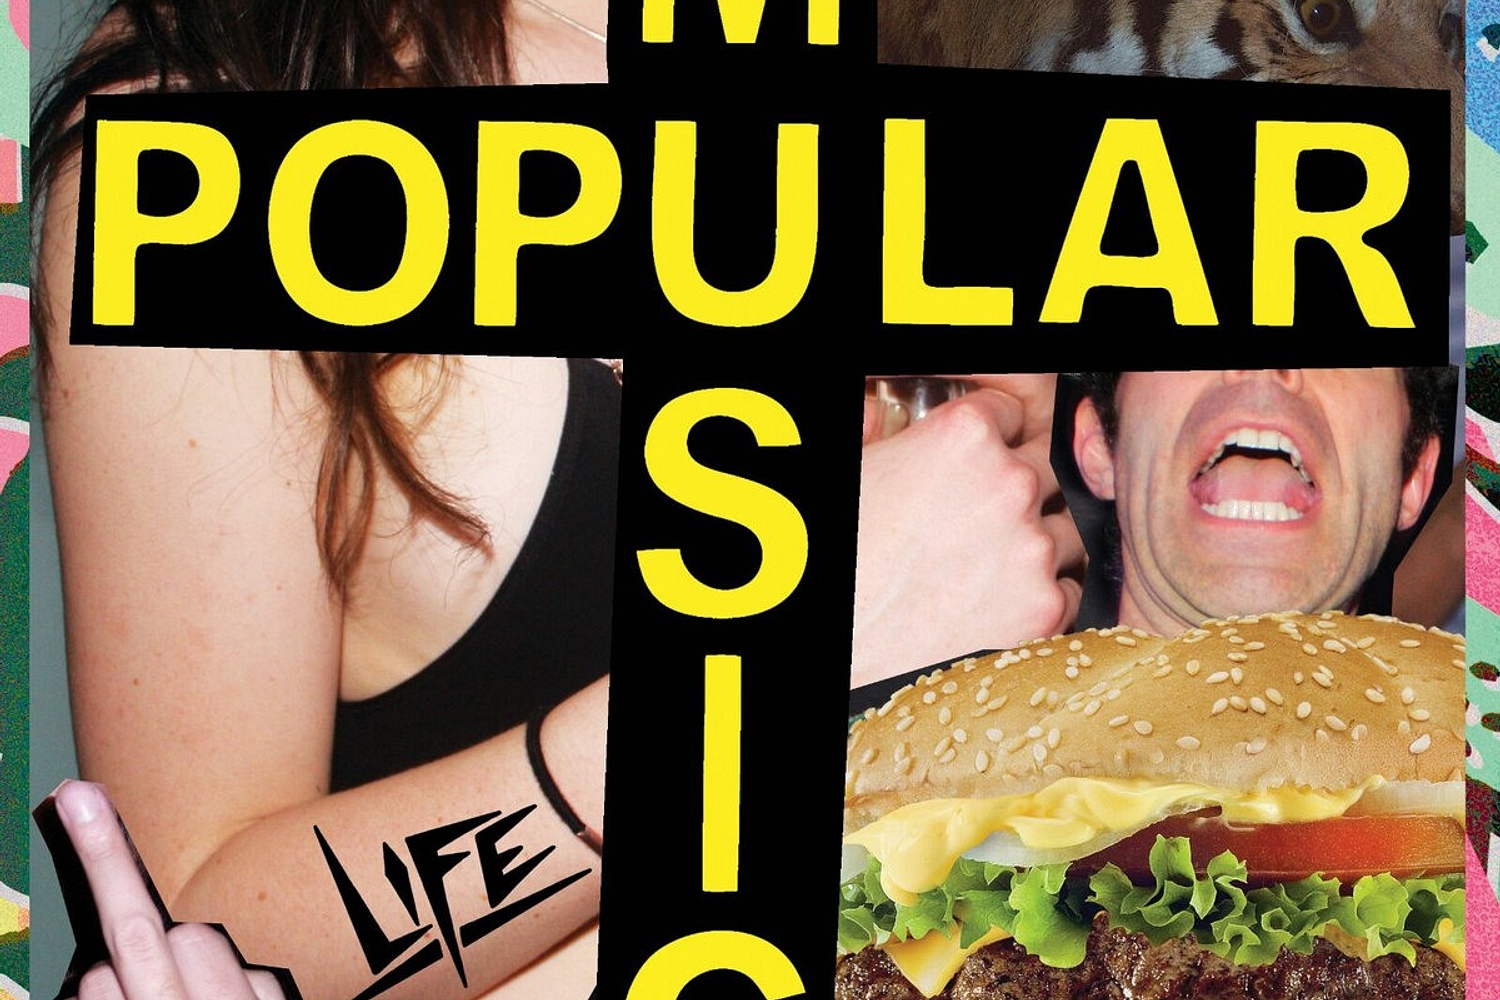 LIFE - Popular Music